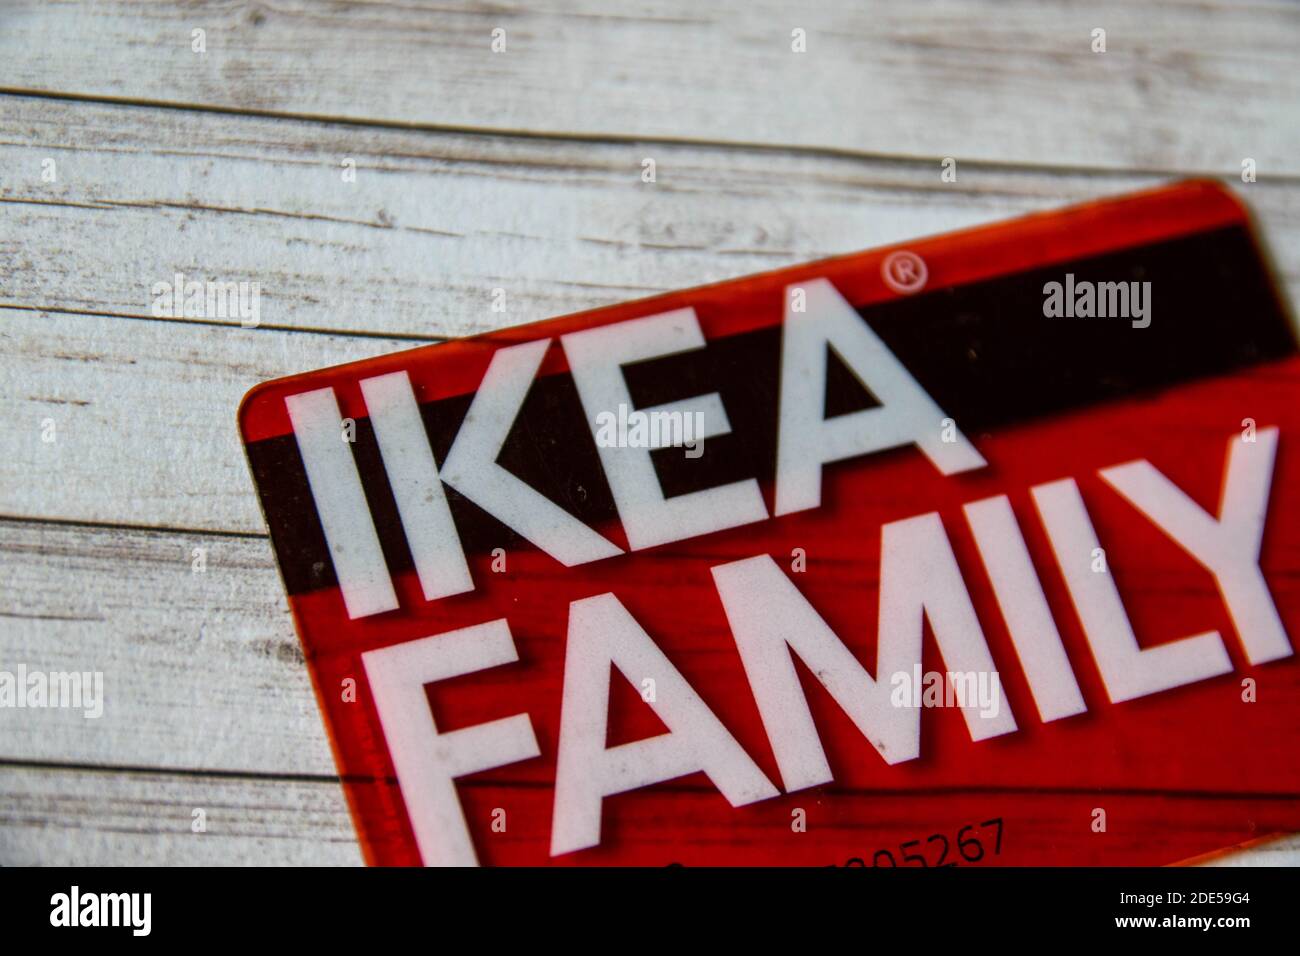 Ikea Family carta fedeltà Foto stock - Alamy